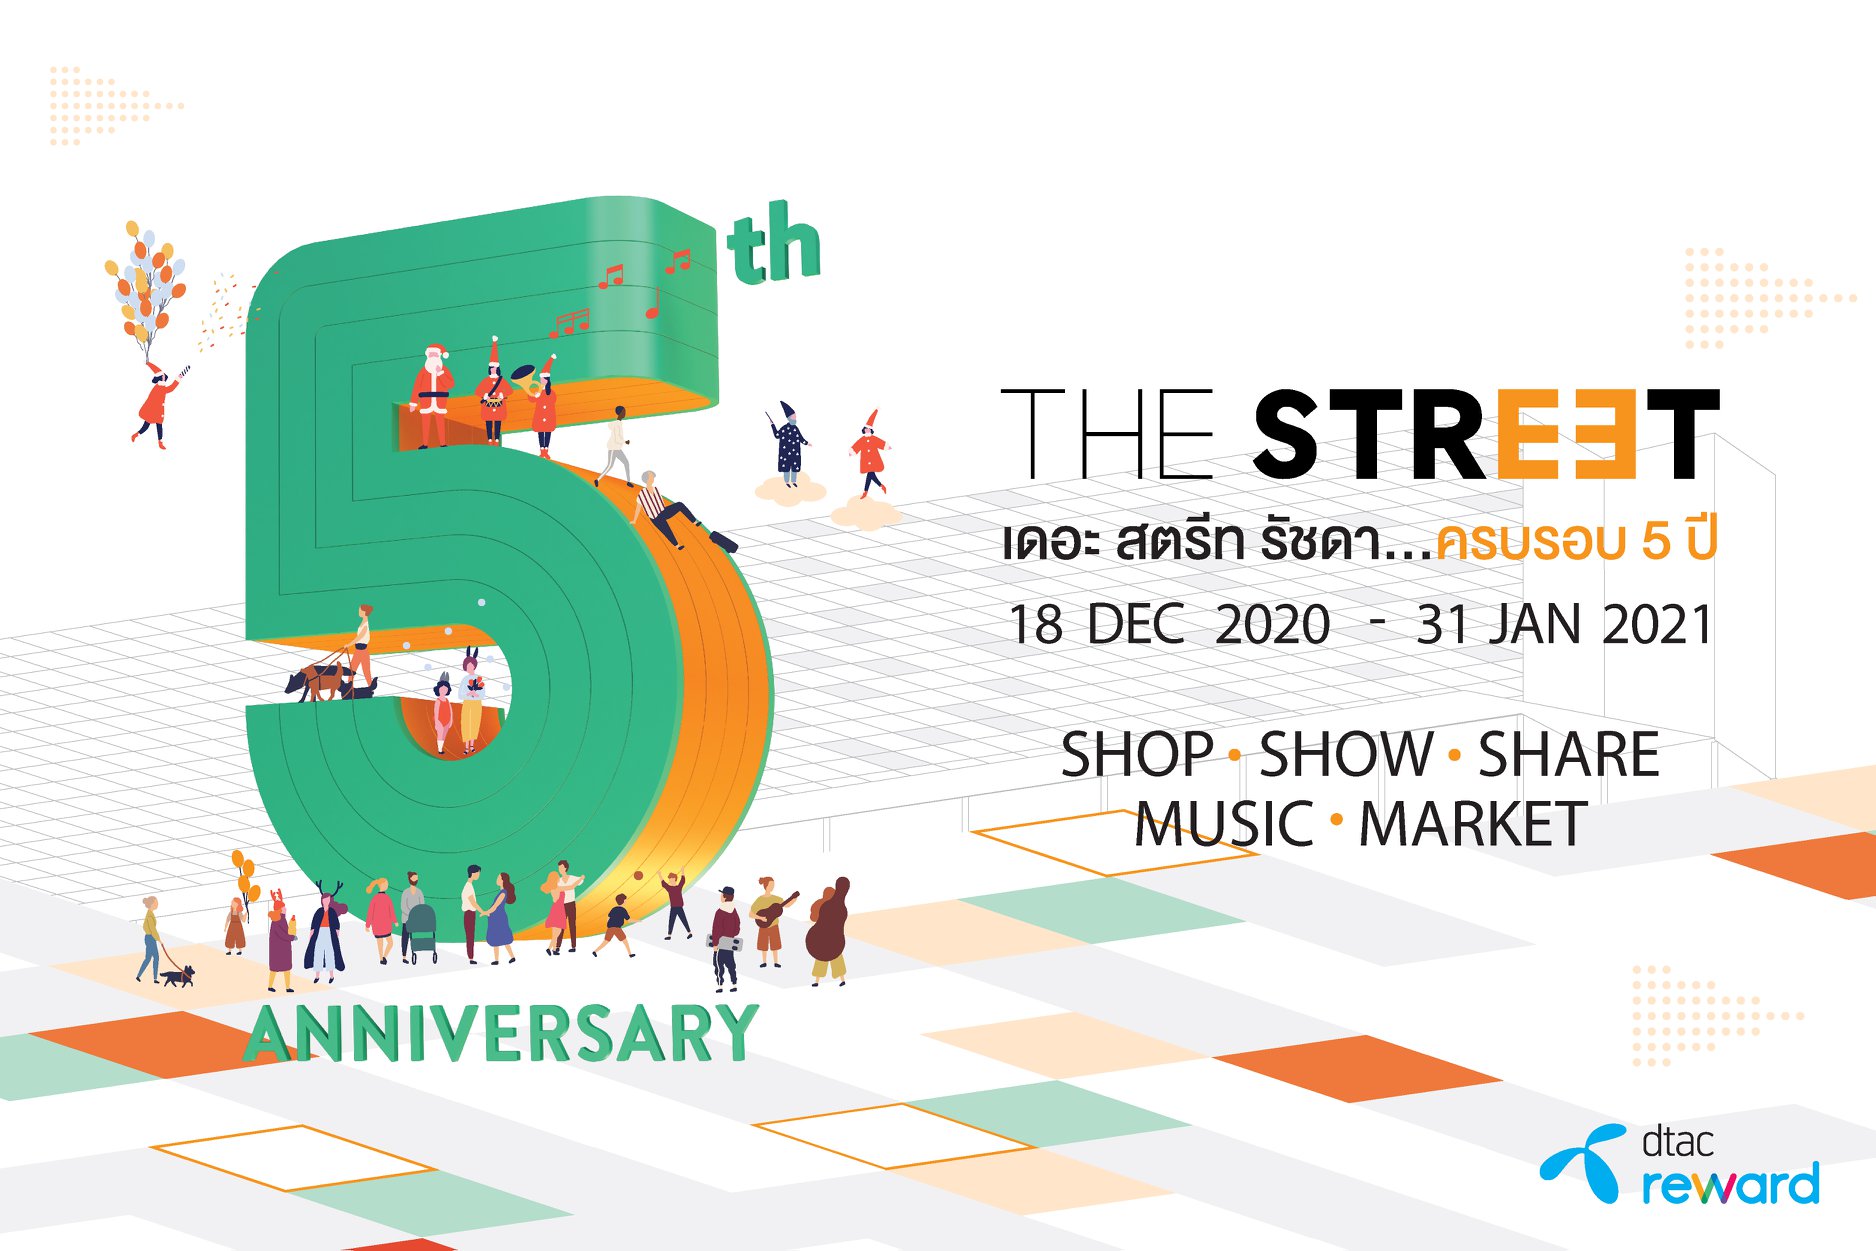 The Street 5th Anniversary